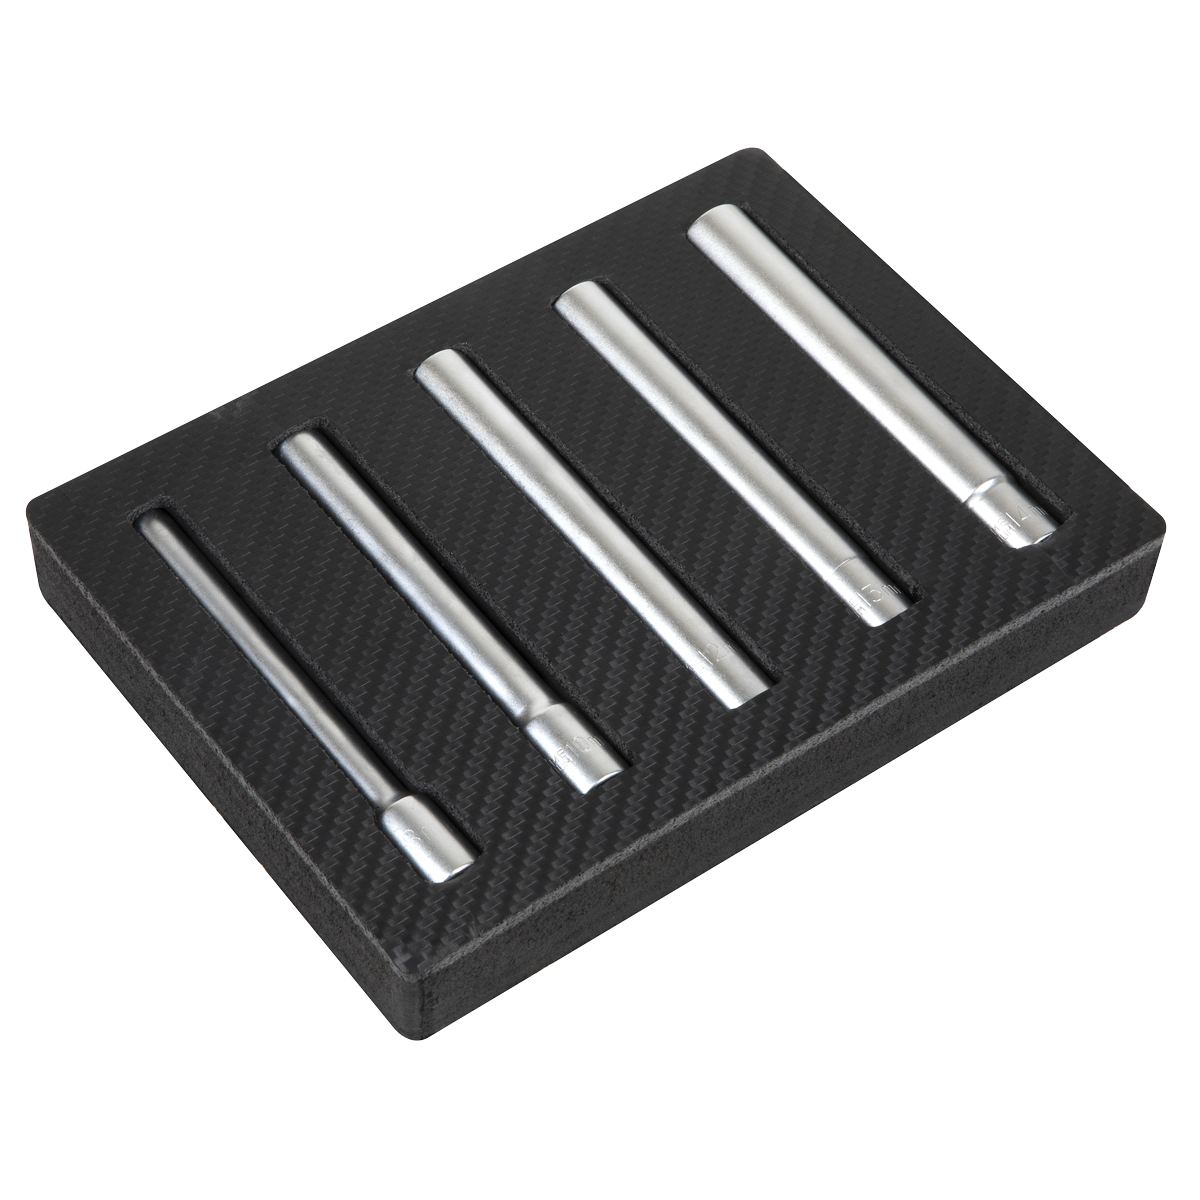 Sealey SX814 Extra-Deep Socket Set 5pc 8 10 12 13 14mm 3/8"Sq Drive